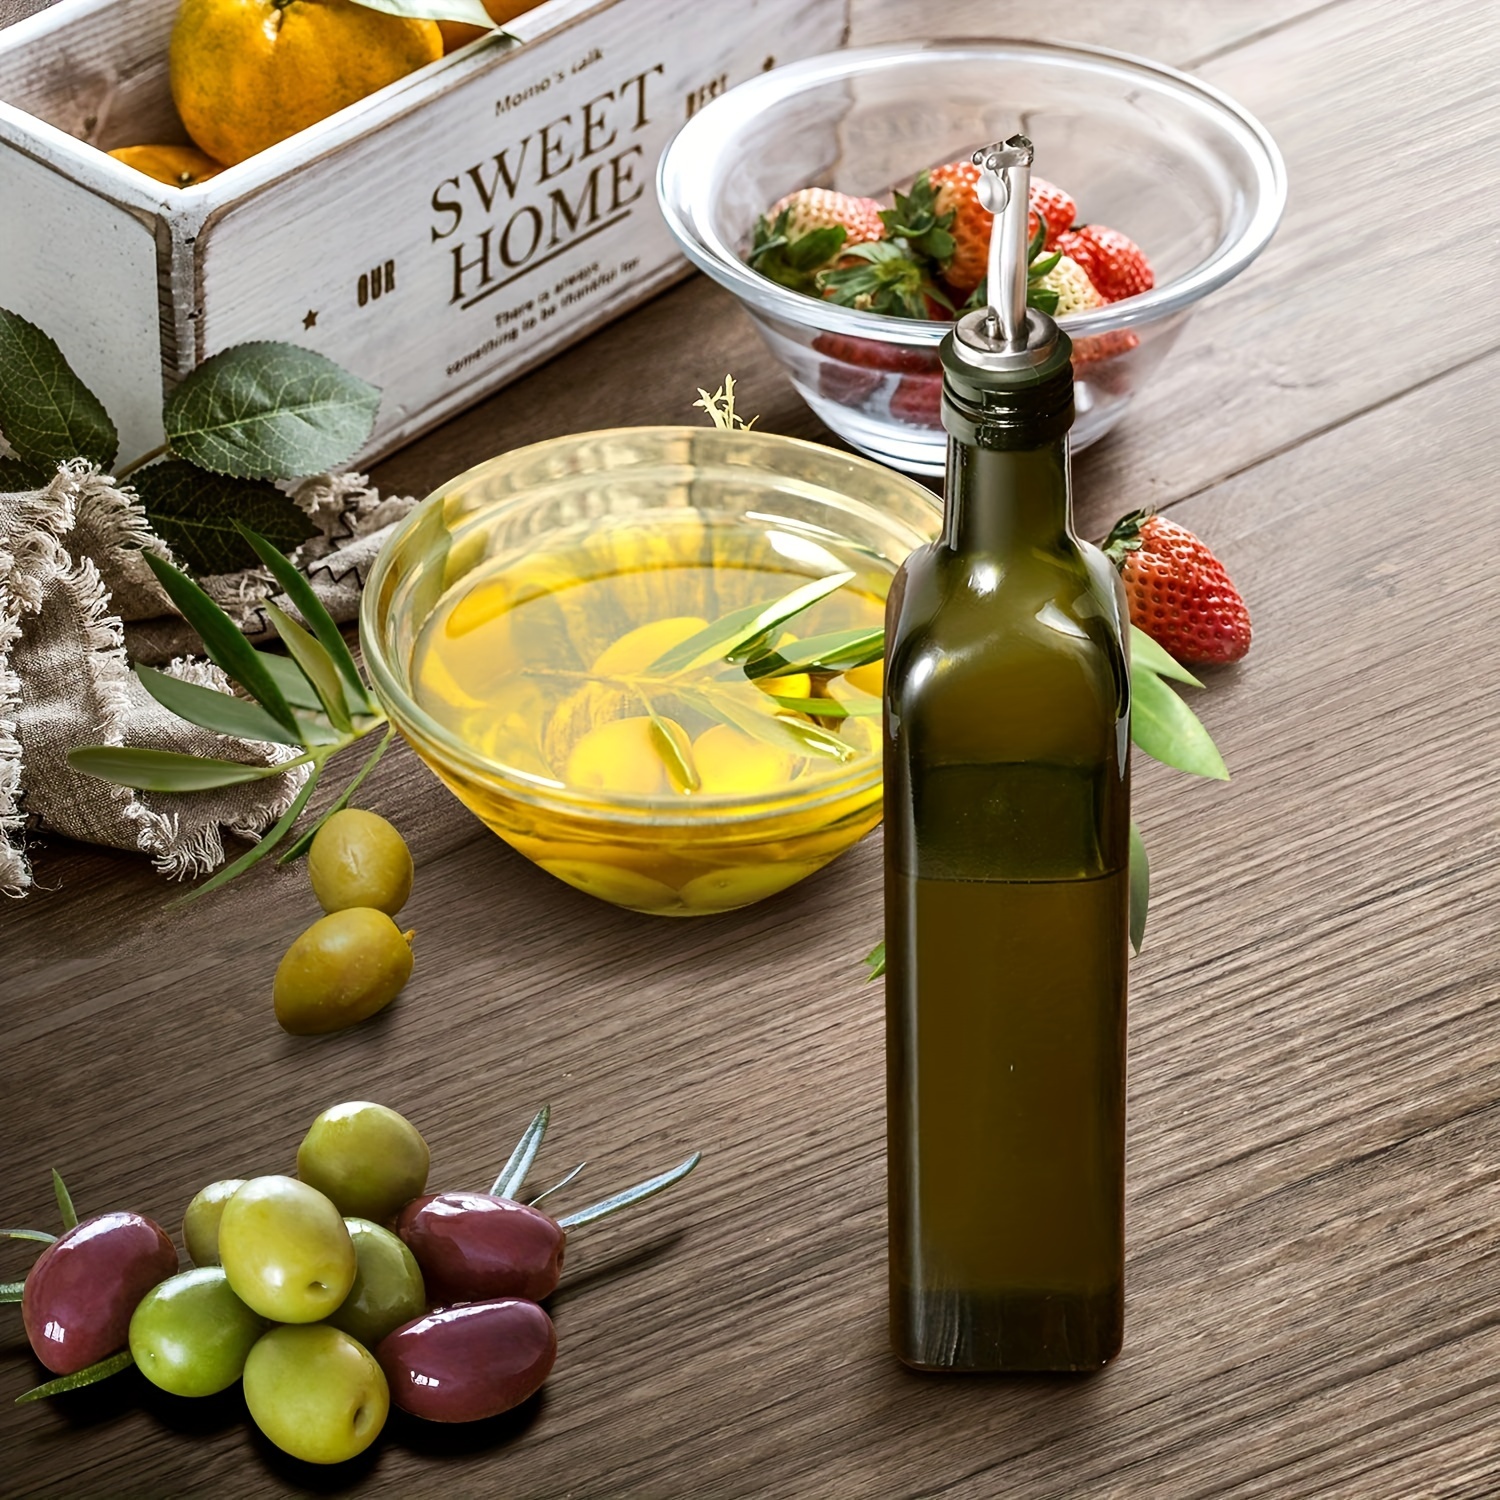 Olive Oil Measure Dispenser